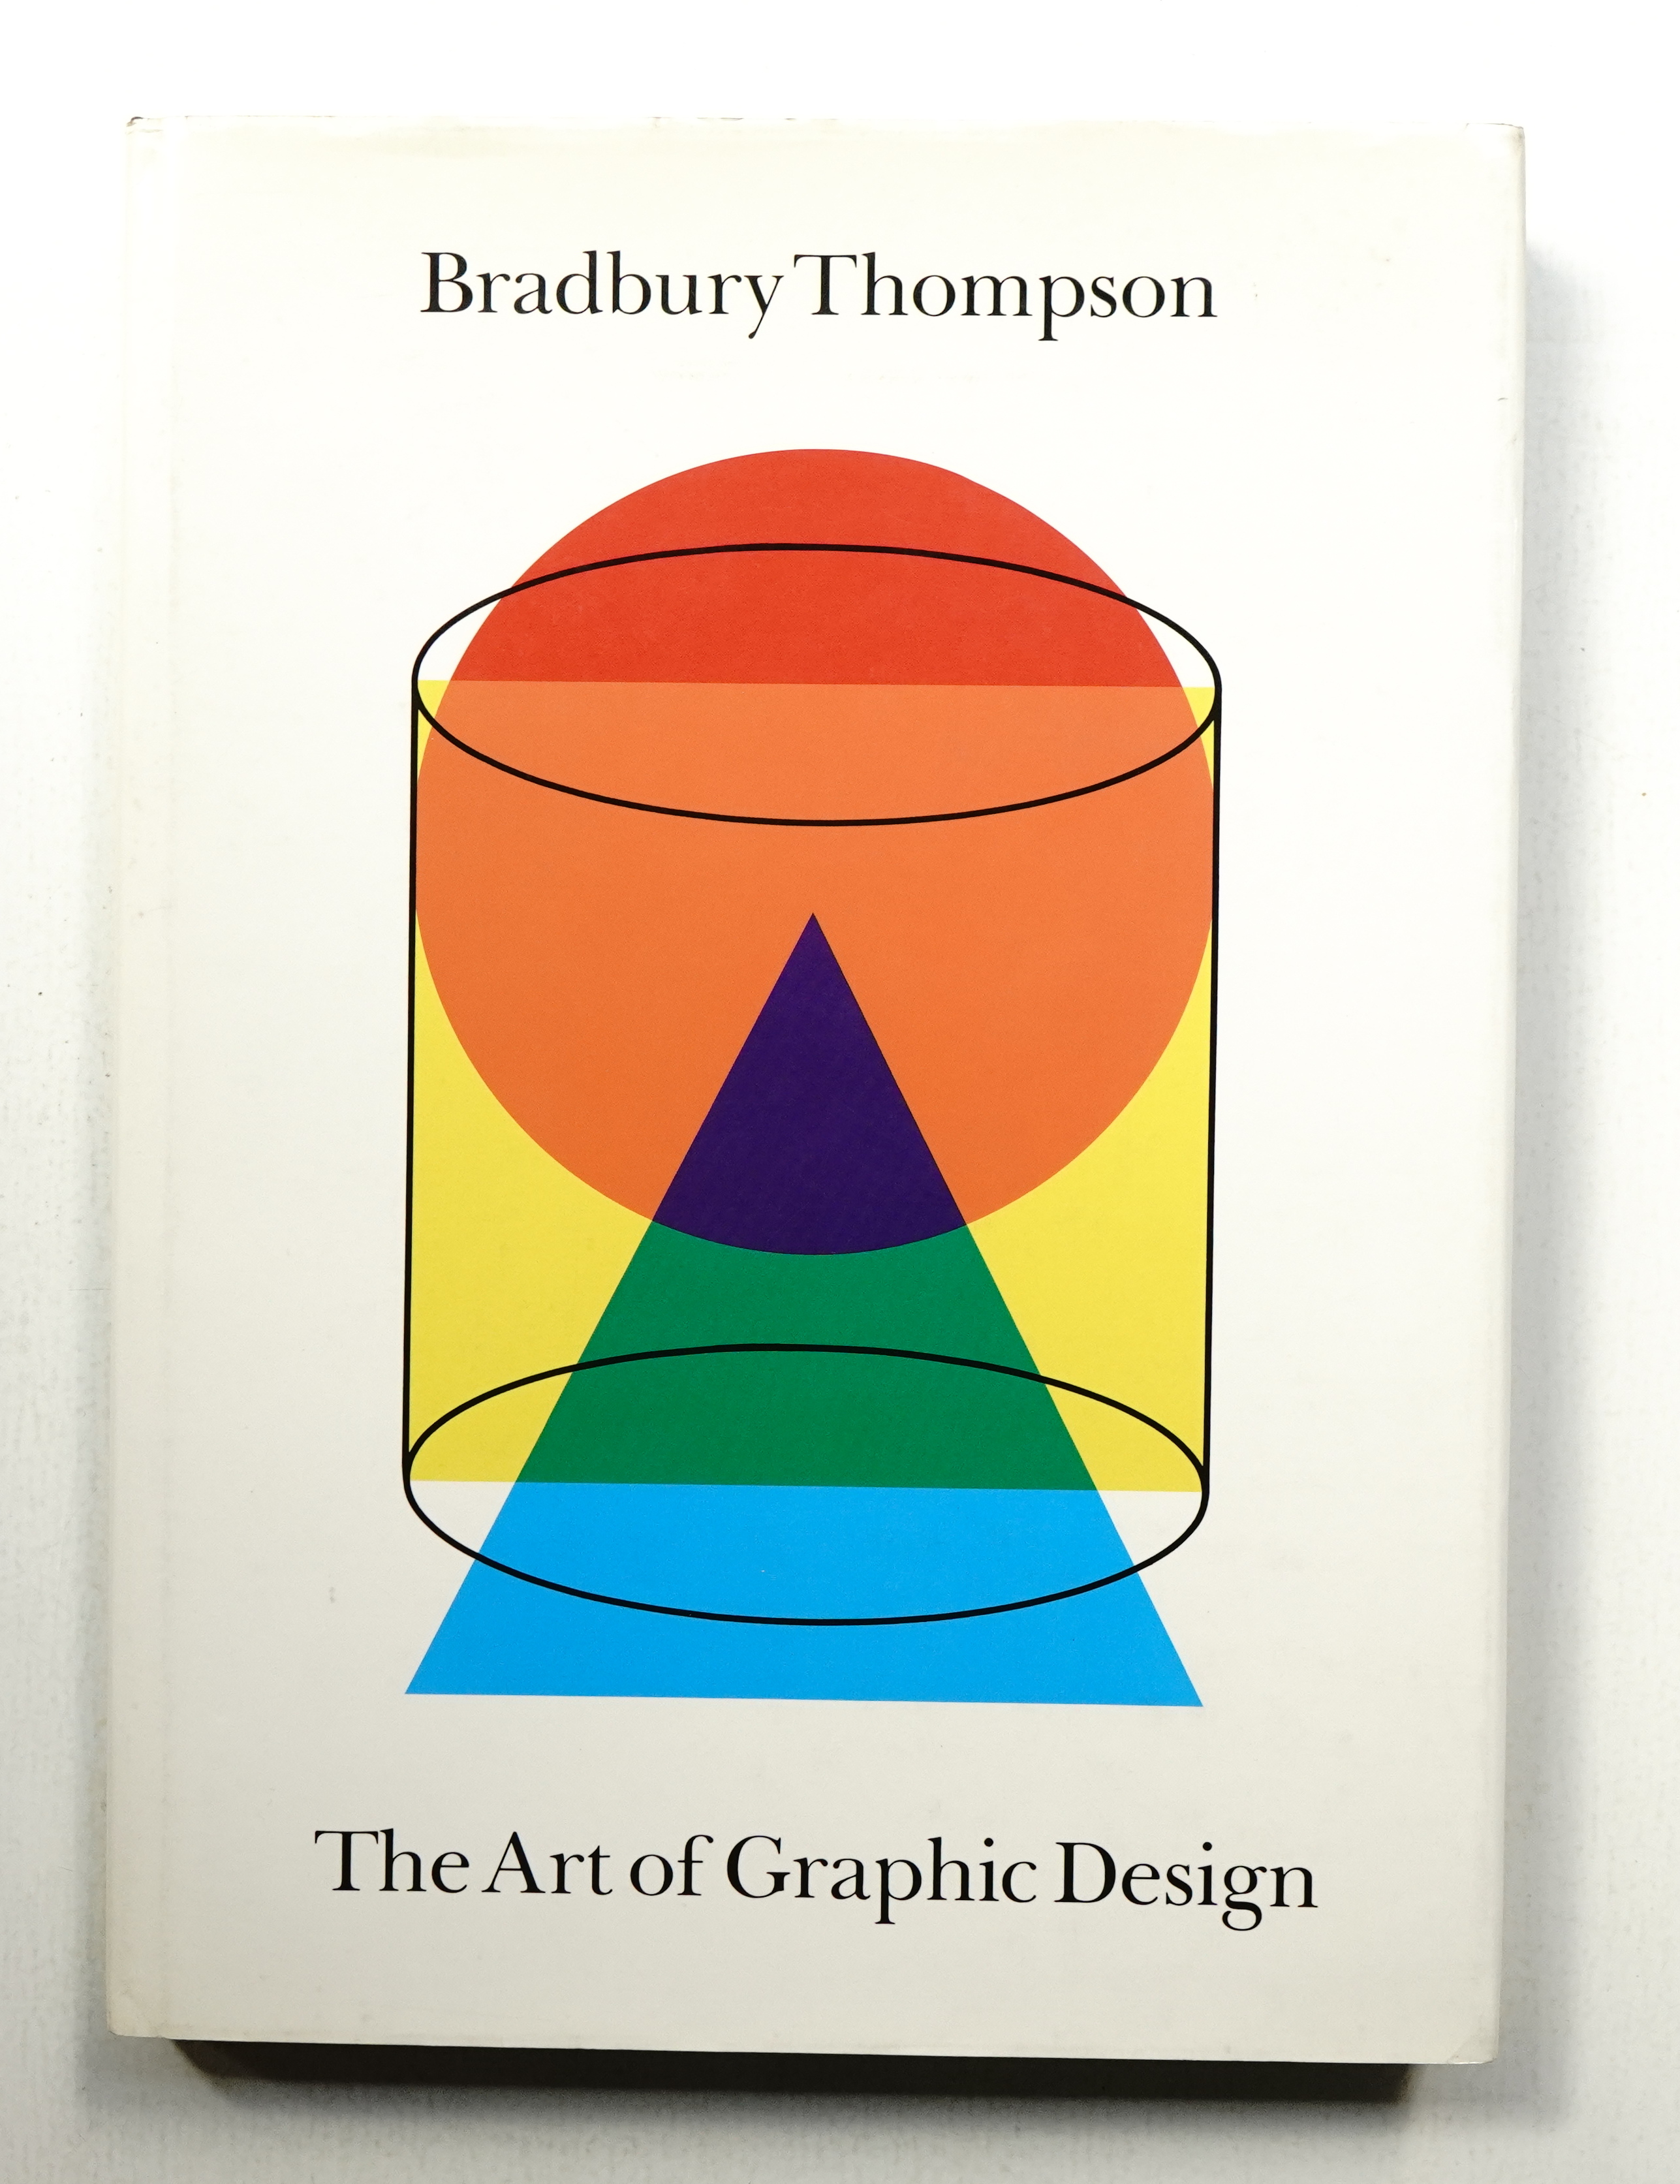 The Art of Graphic Design : Bradbury Thompson(with contributions